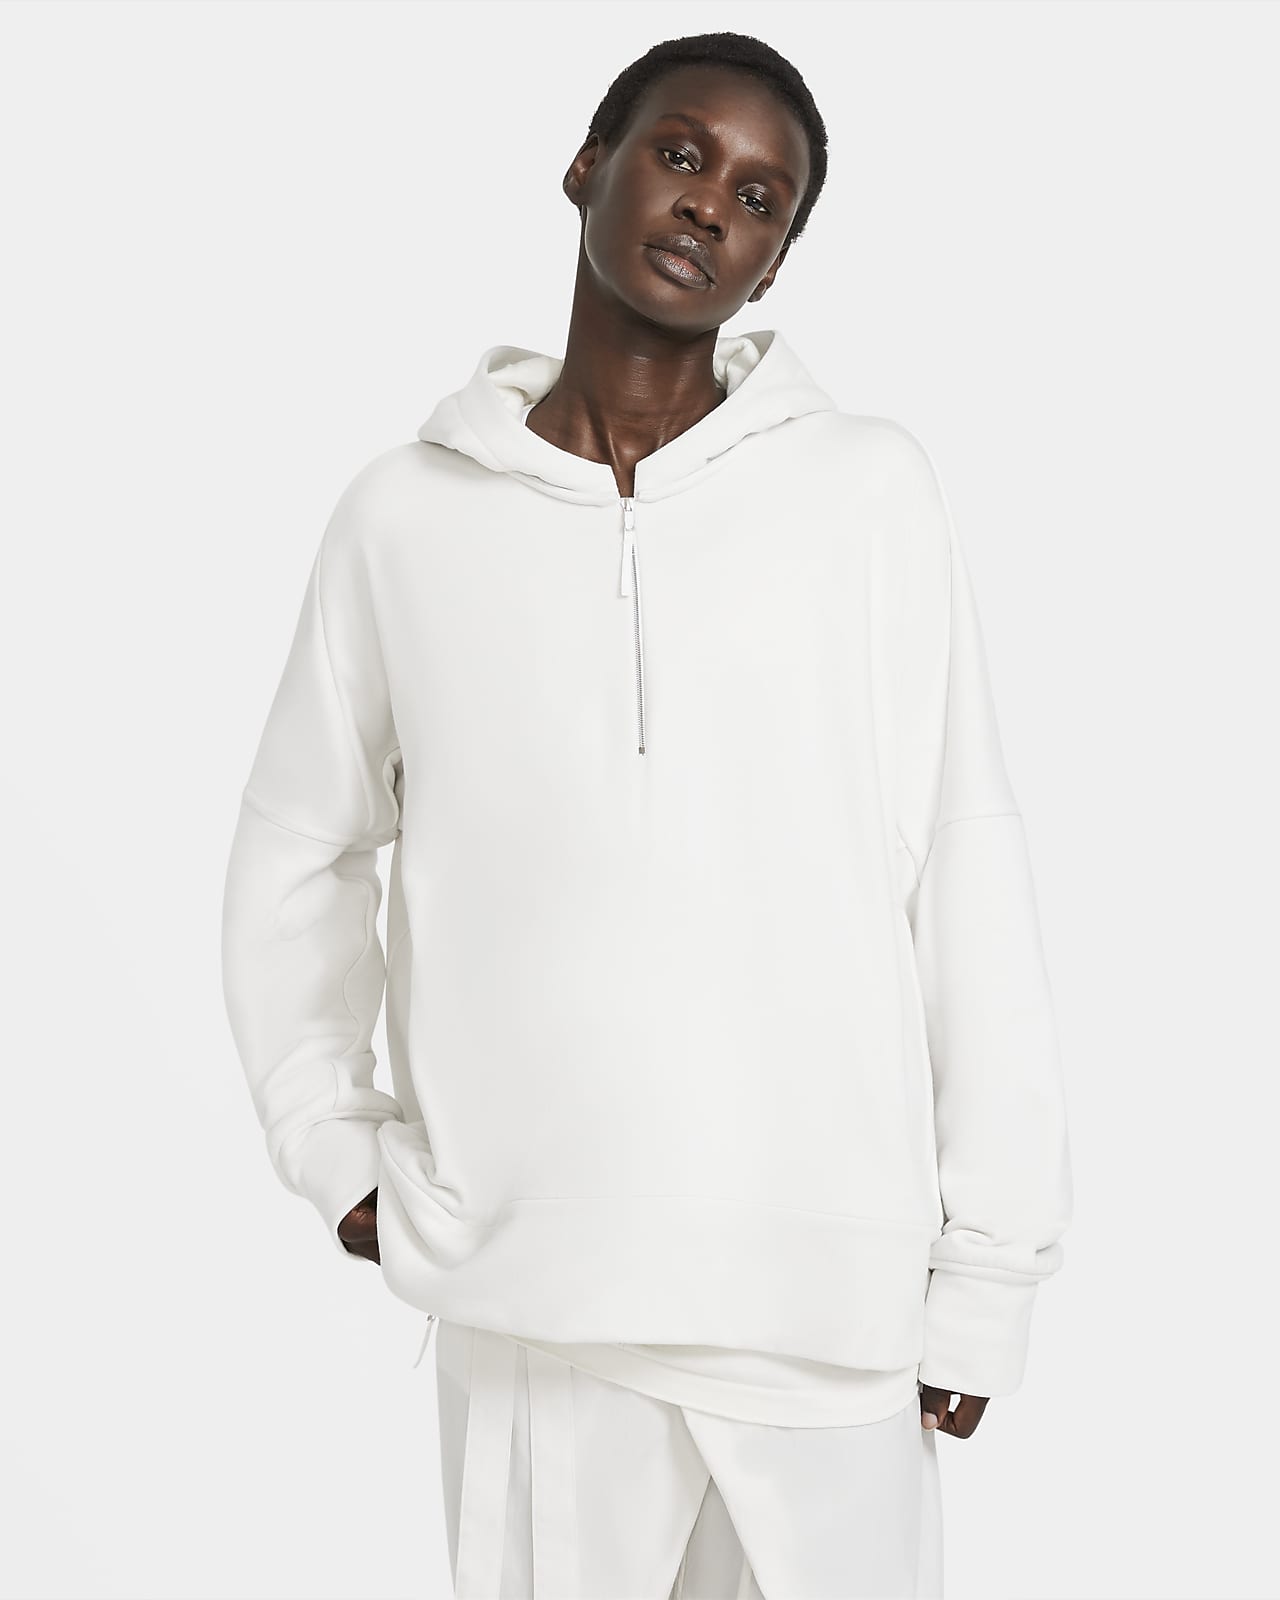 nike womens hoodie white